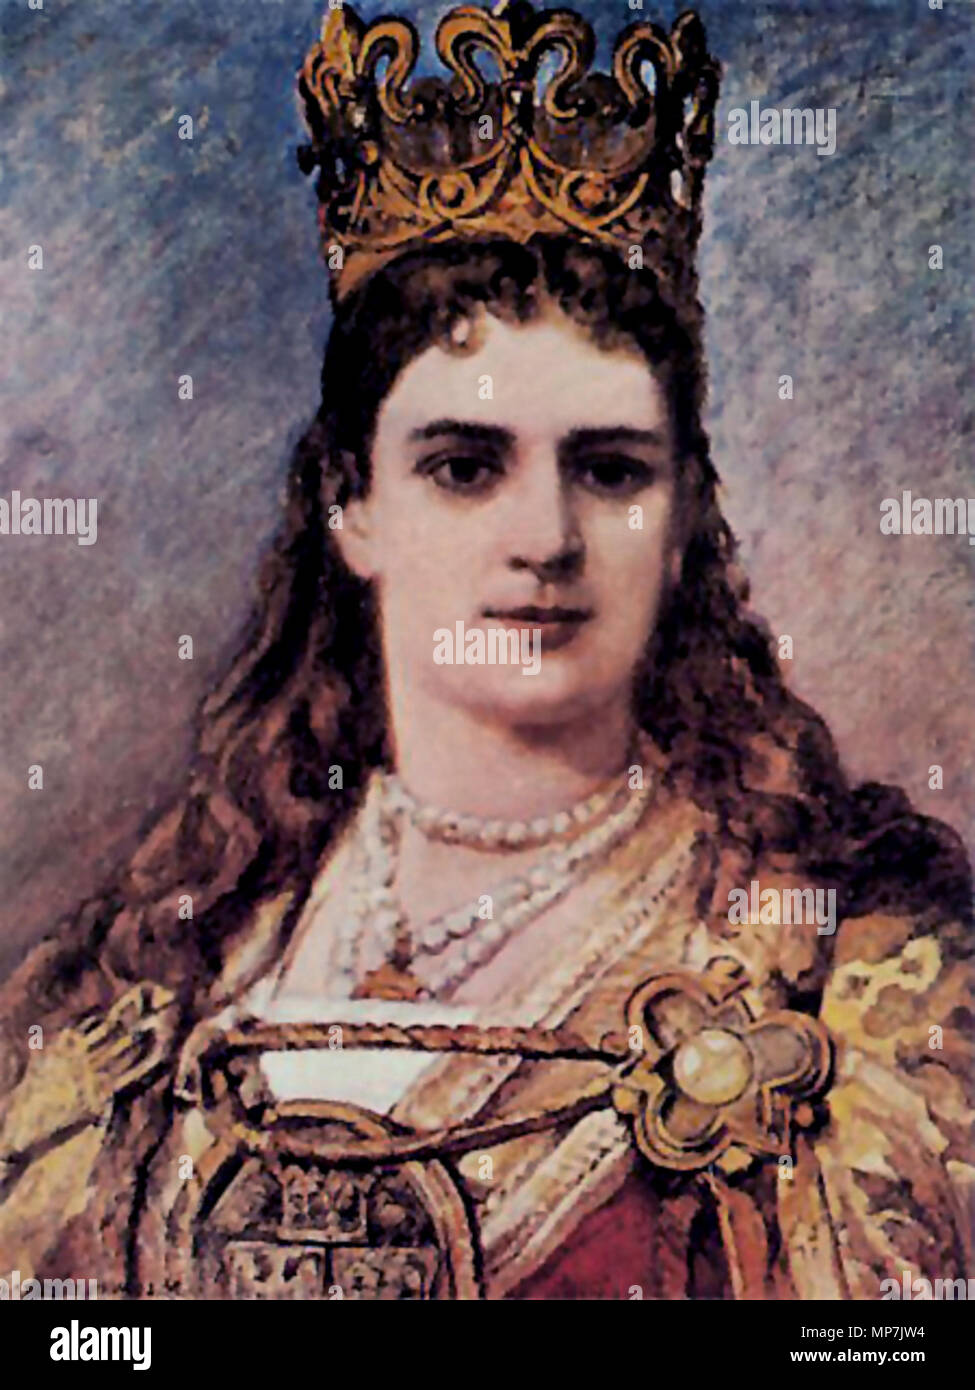 Anglais : Portrait de la Reine Jadwiga de Pologne. Polski : Portret królowej Jadwigi Andegaweńskiej 1838-1893. 690 Jadwiga Jan Matejko (Poczet) Banque D'Images